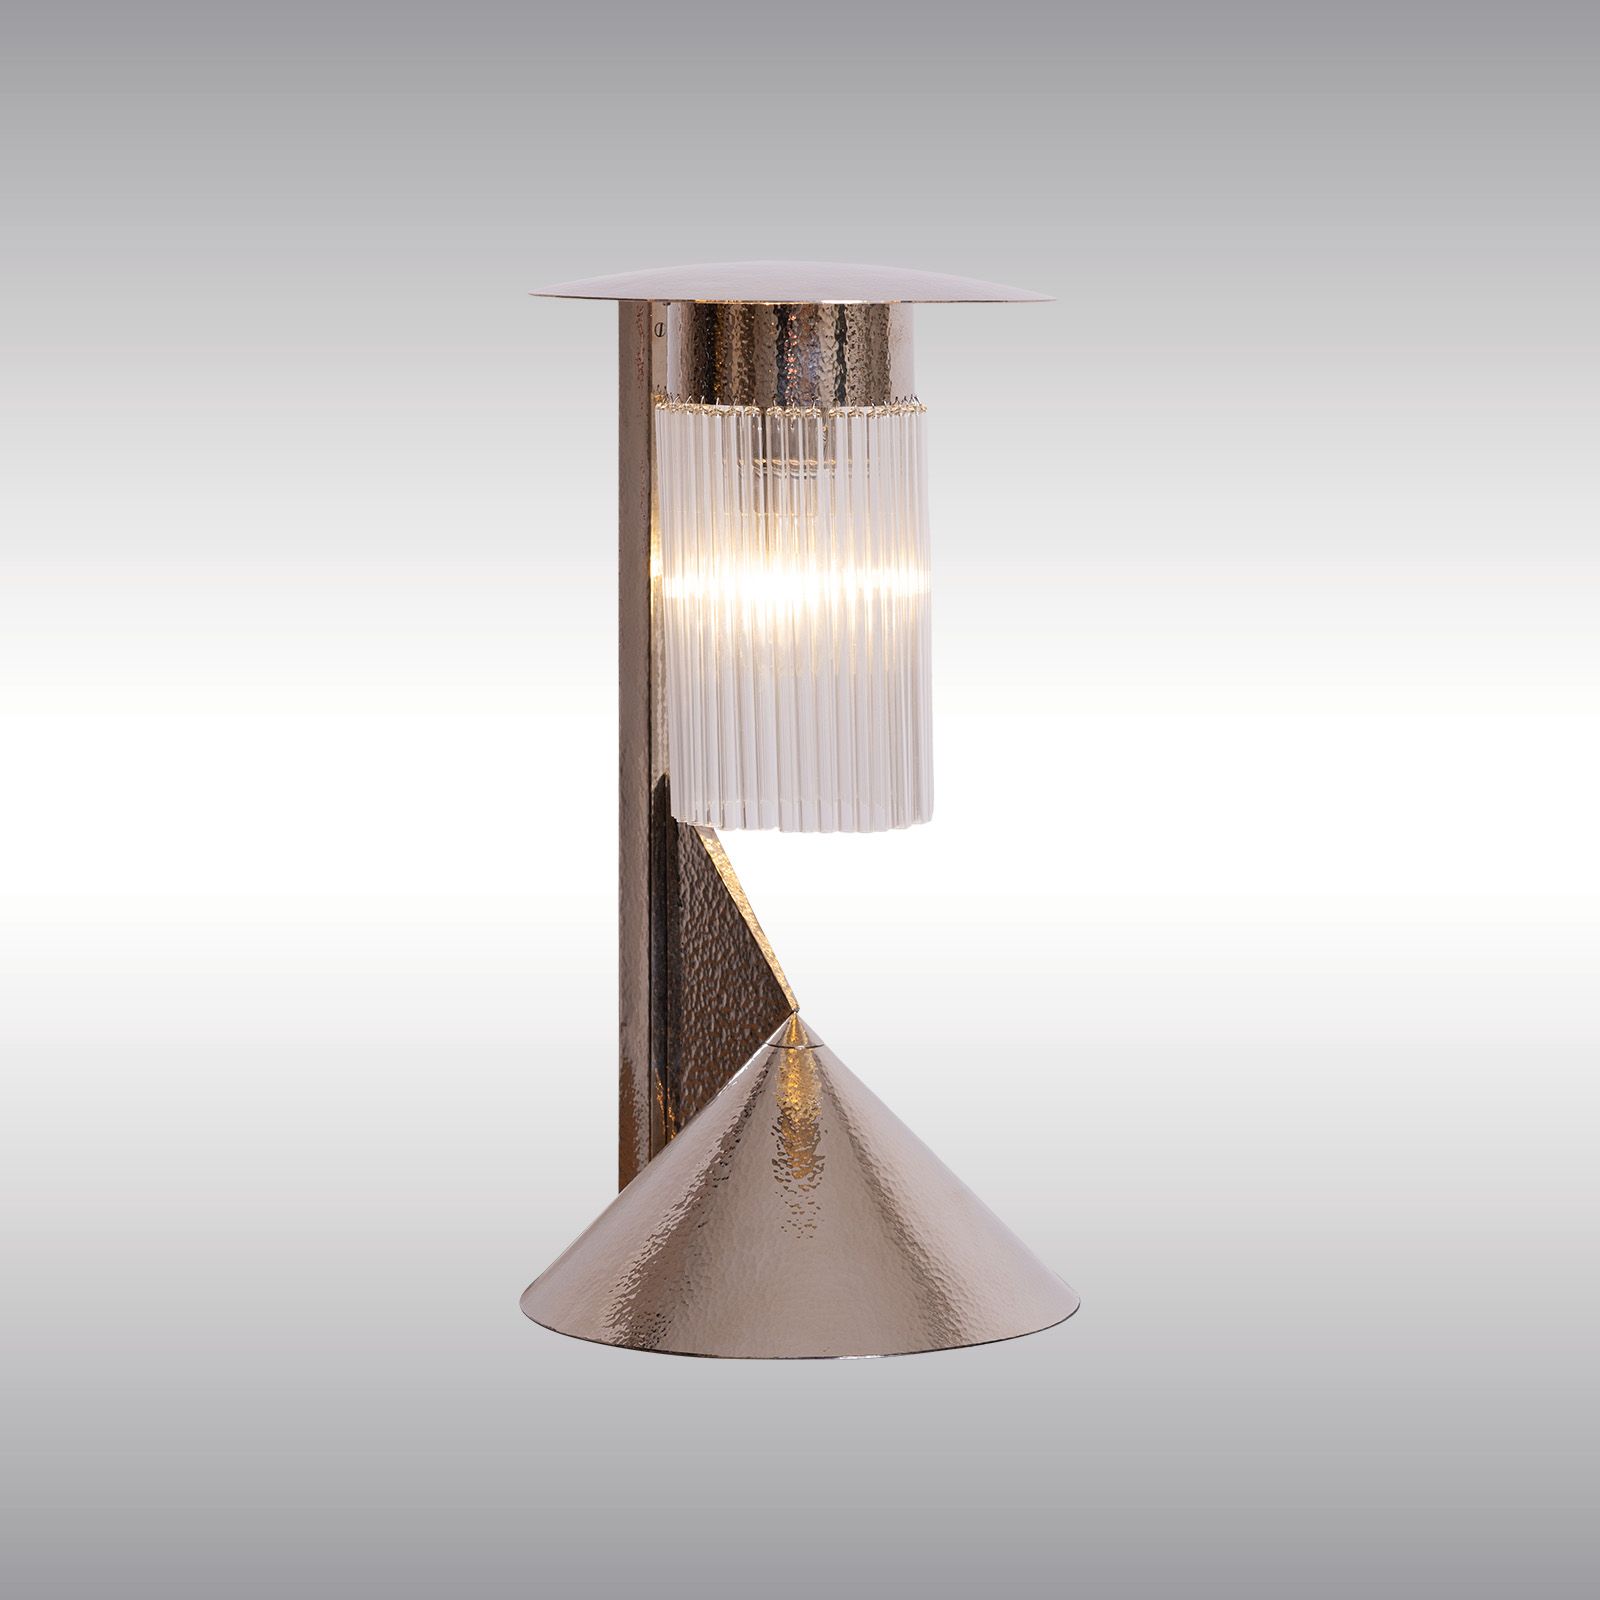 WOKA LAMPS VIENNA - OrderNr.: 20317|Reininghaus gehämmert, Kolo Moser Tischlampe reines Silber - Design: Koloman (Kolo) Moser